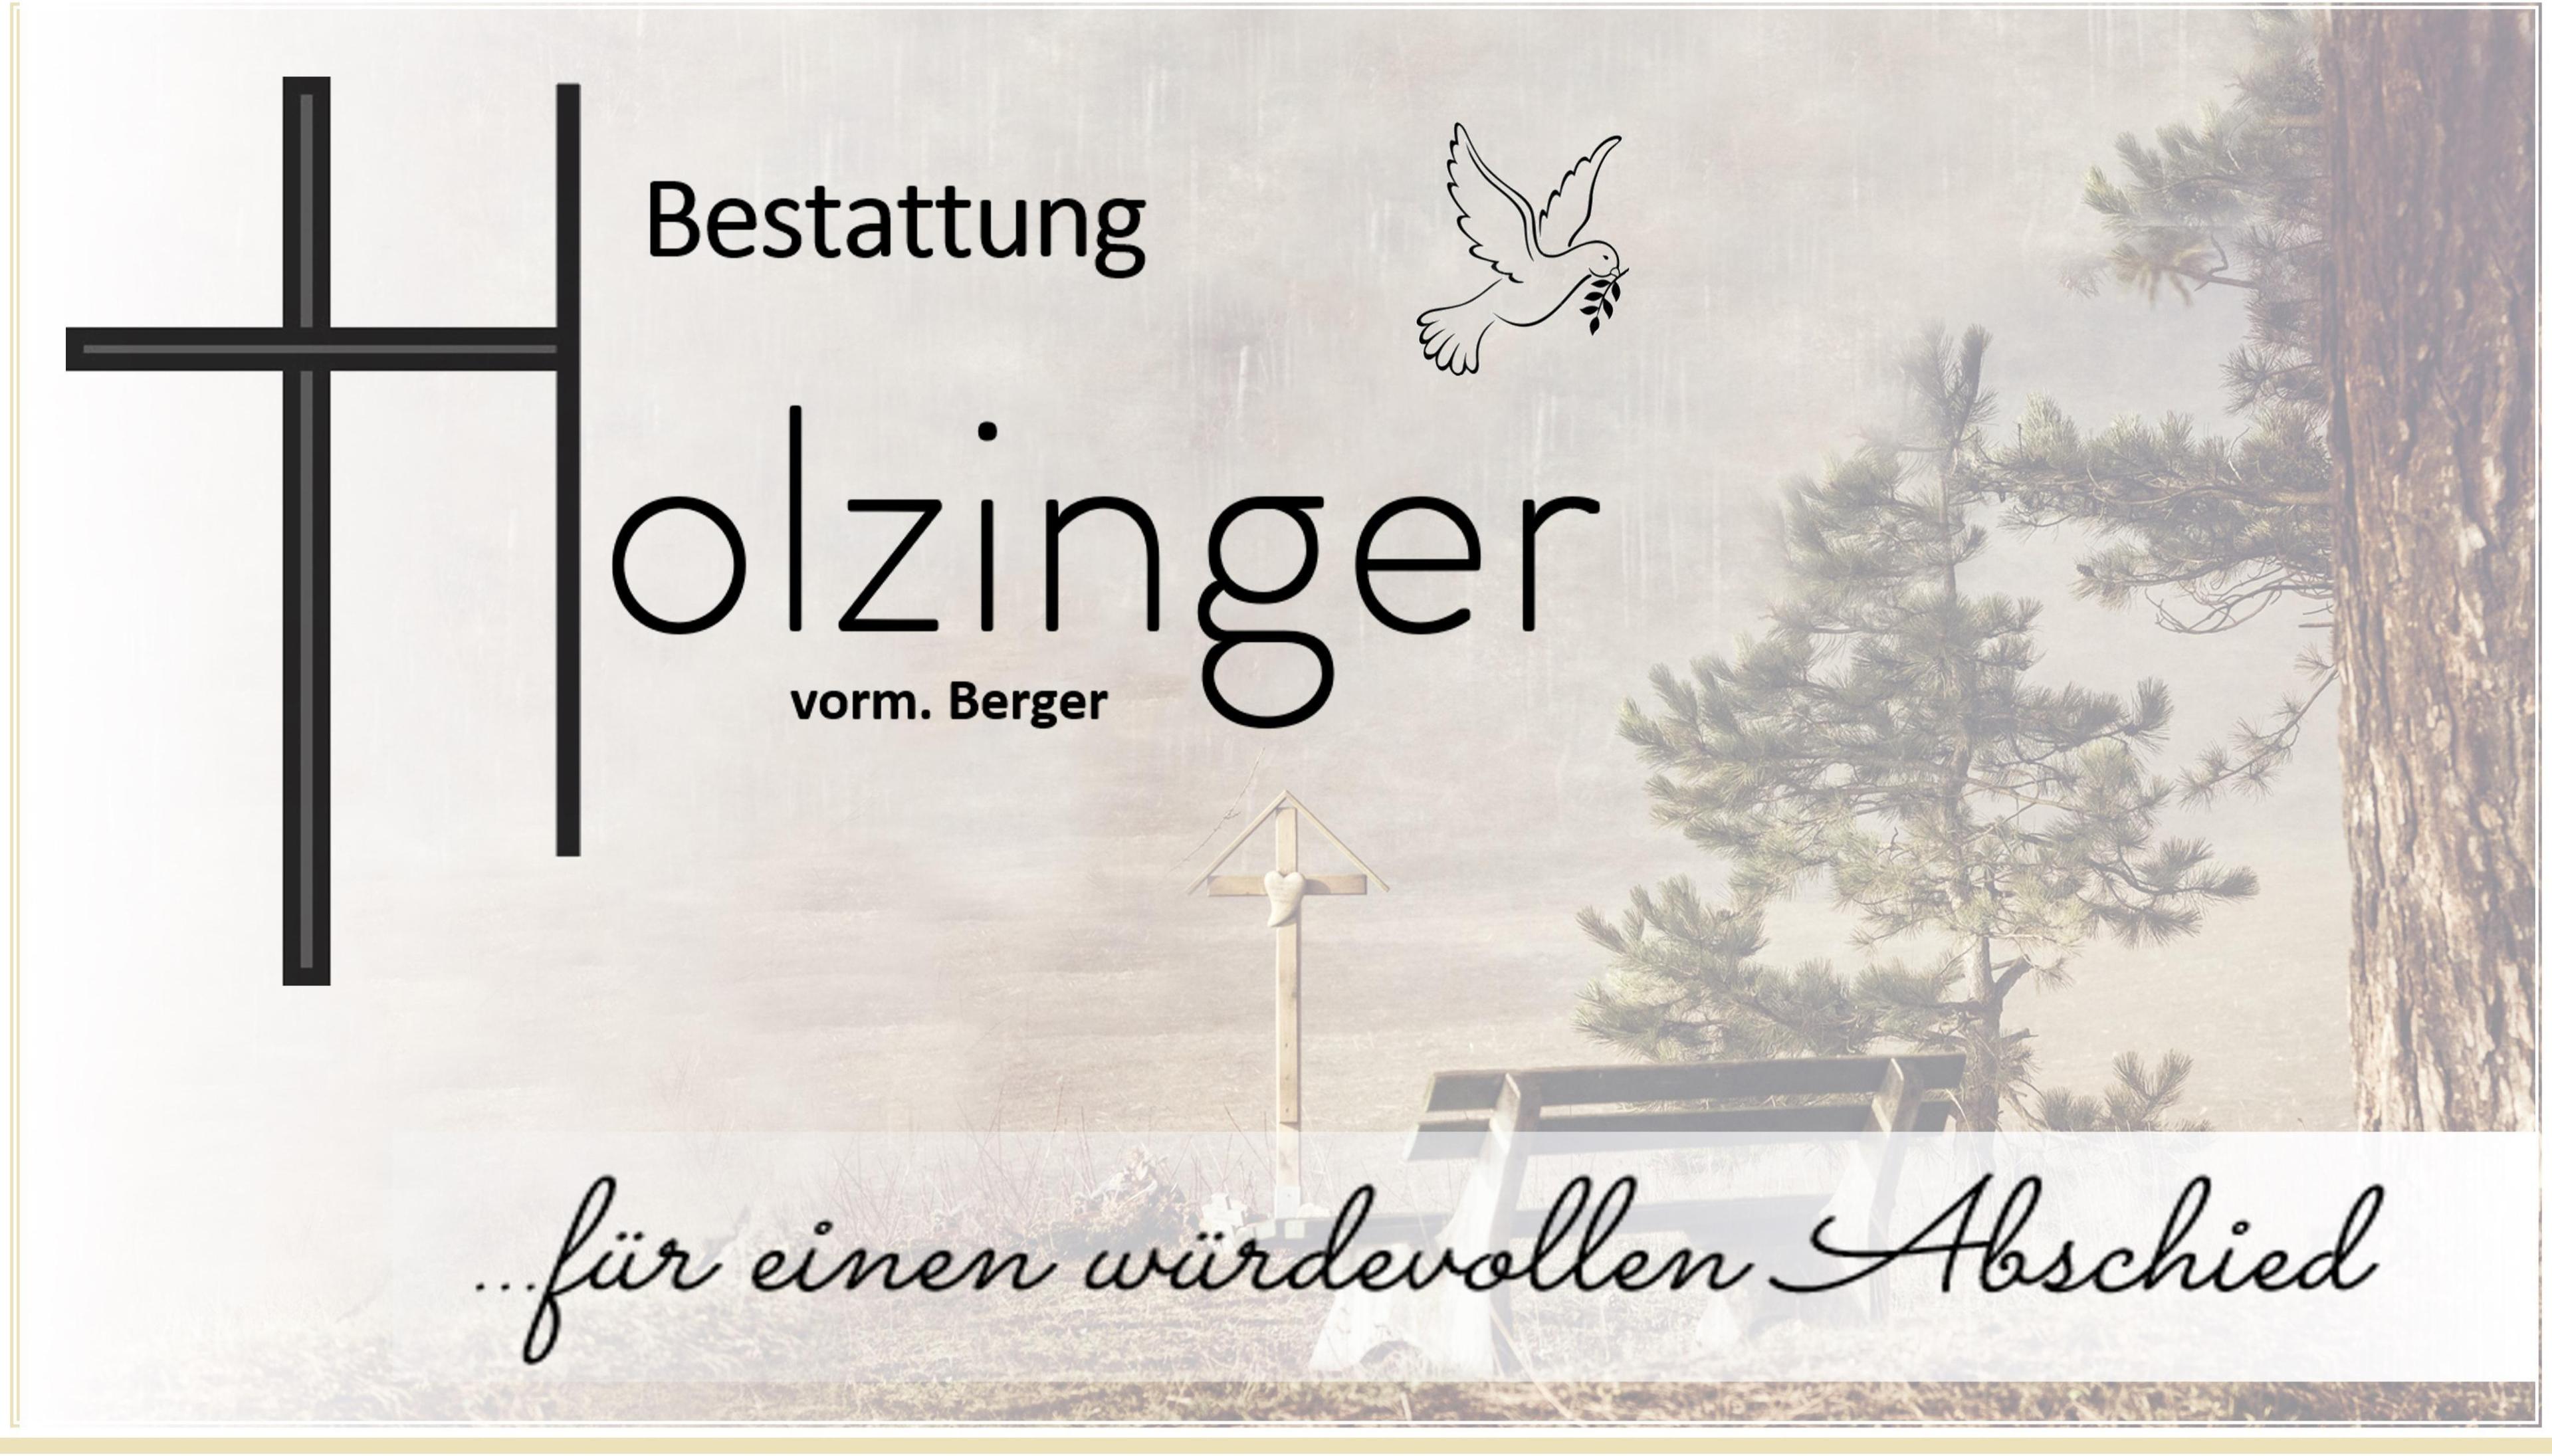 Logo Bestattung Holzinger, vormals Berger